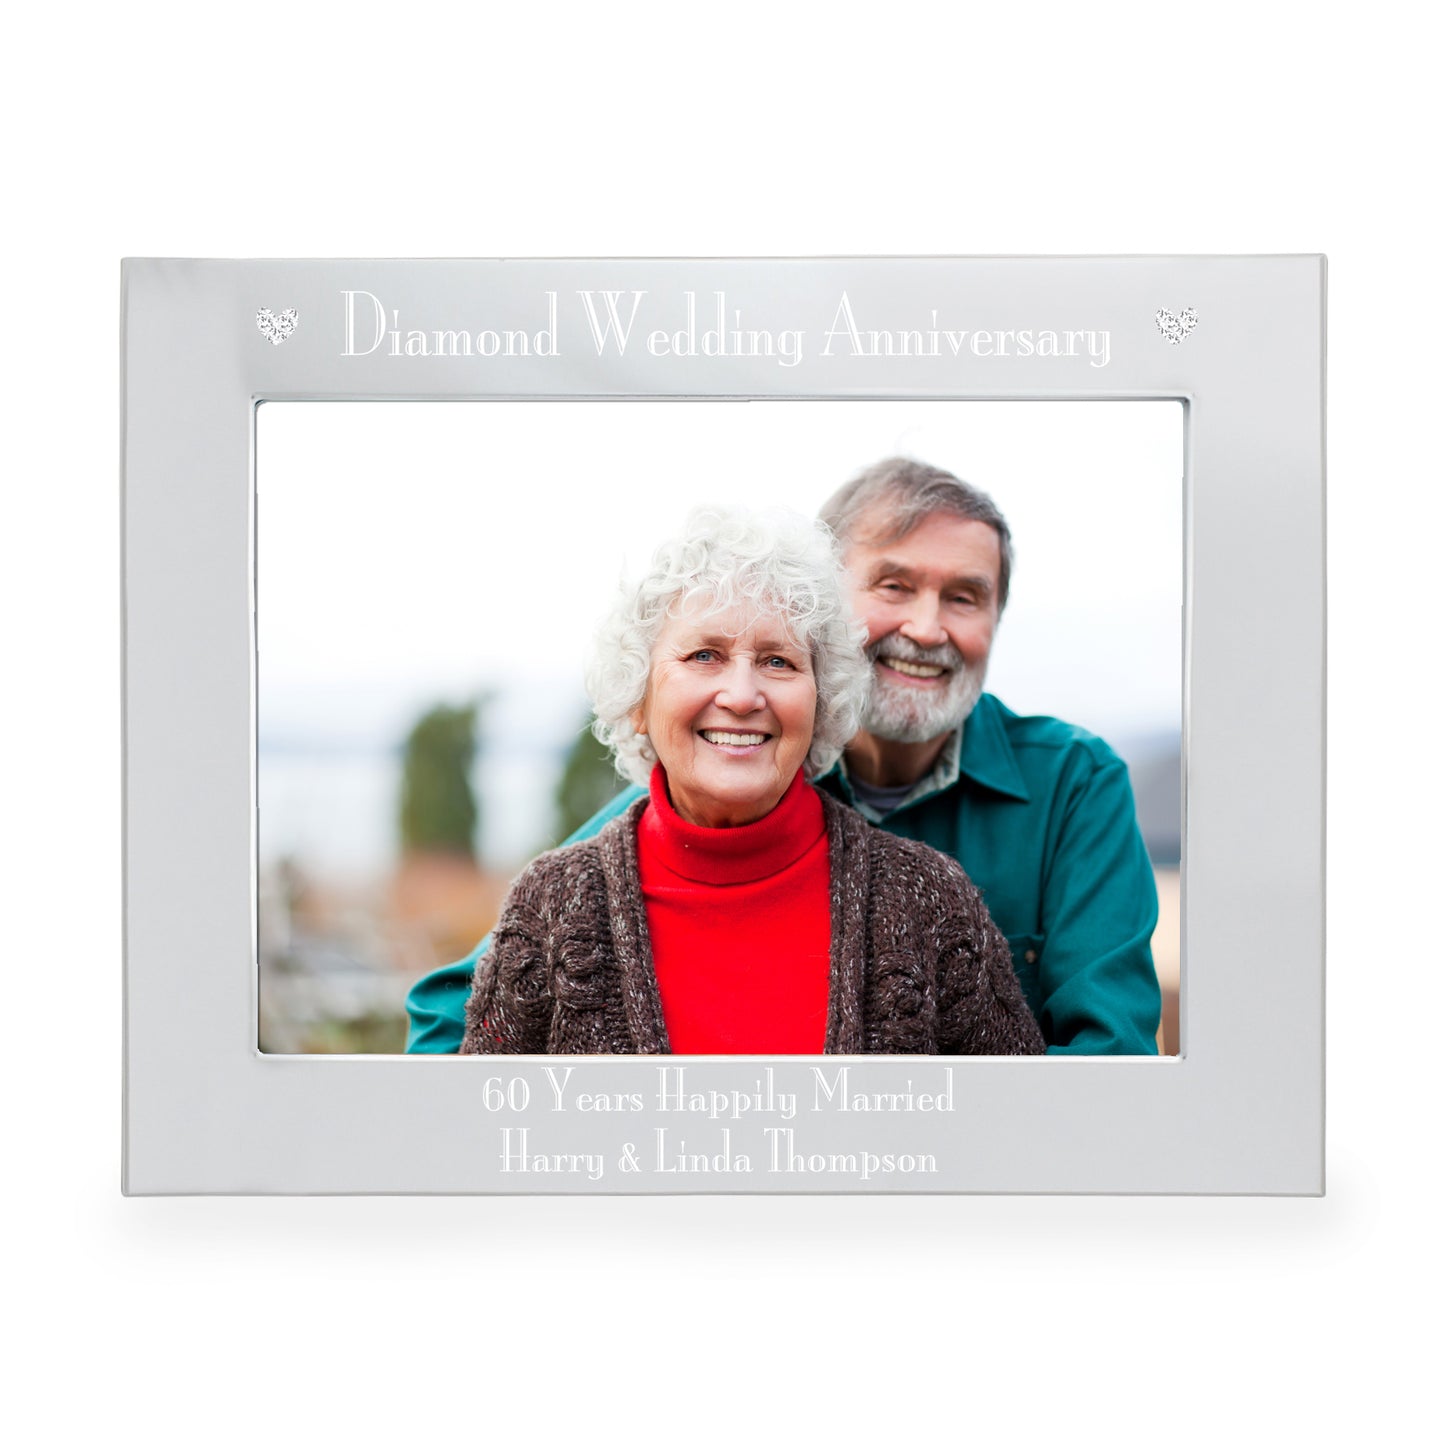 Personalised Diamond Anniversary 7x5 Landscape Photo Frame - Personalise It!